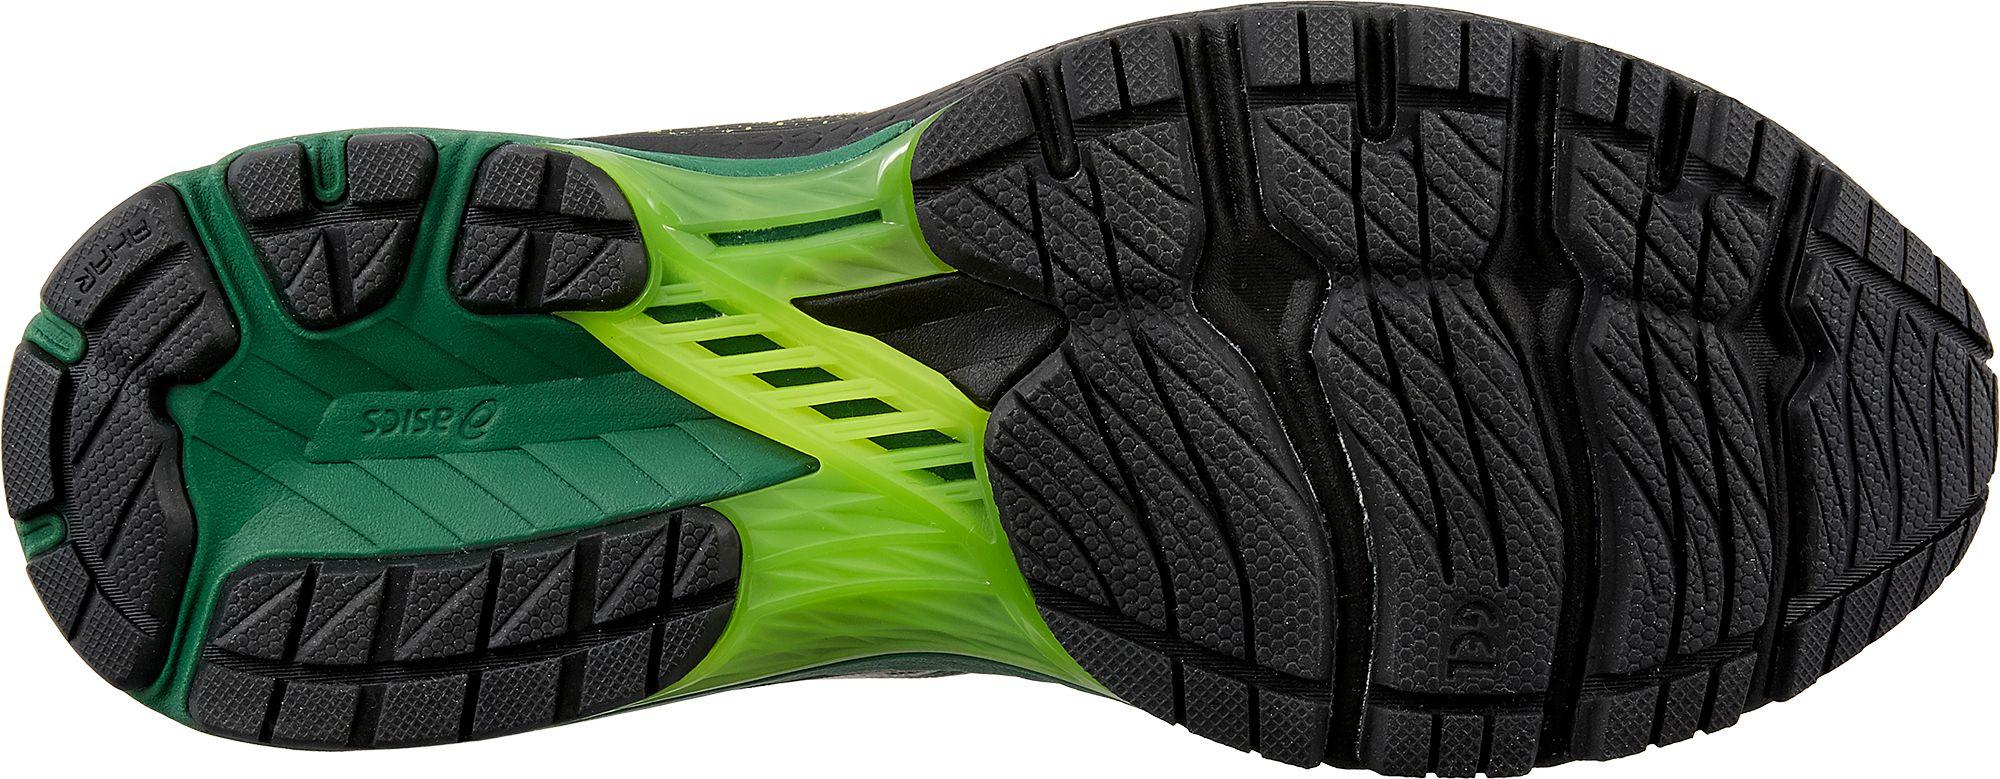 Asics Rubber Gt-2000 8 Running Shoes in Black/Neon Lime (Black) for Men -  Lyst